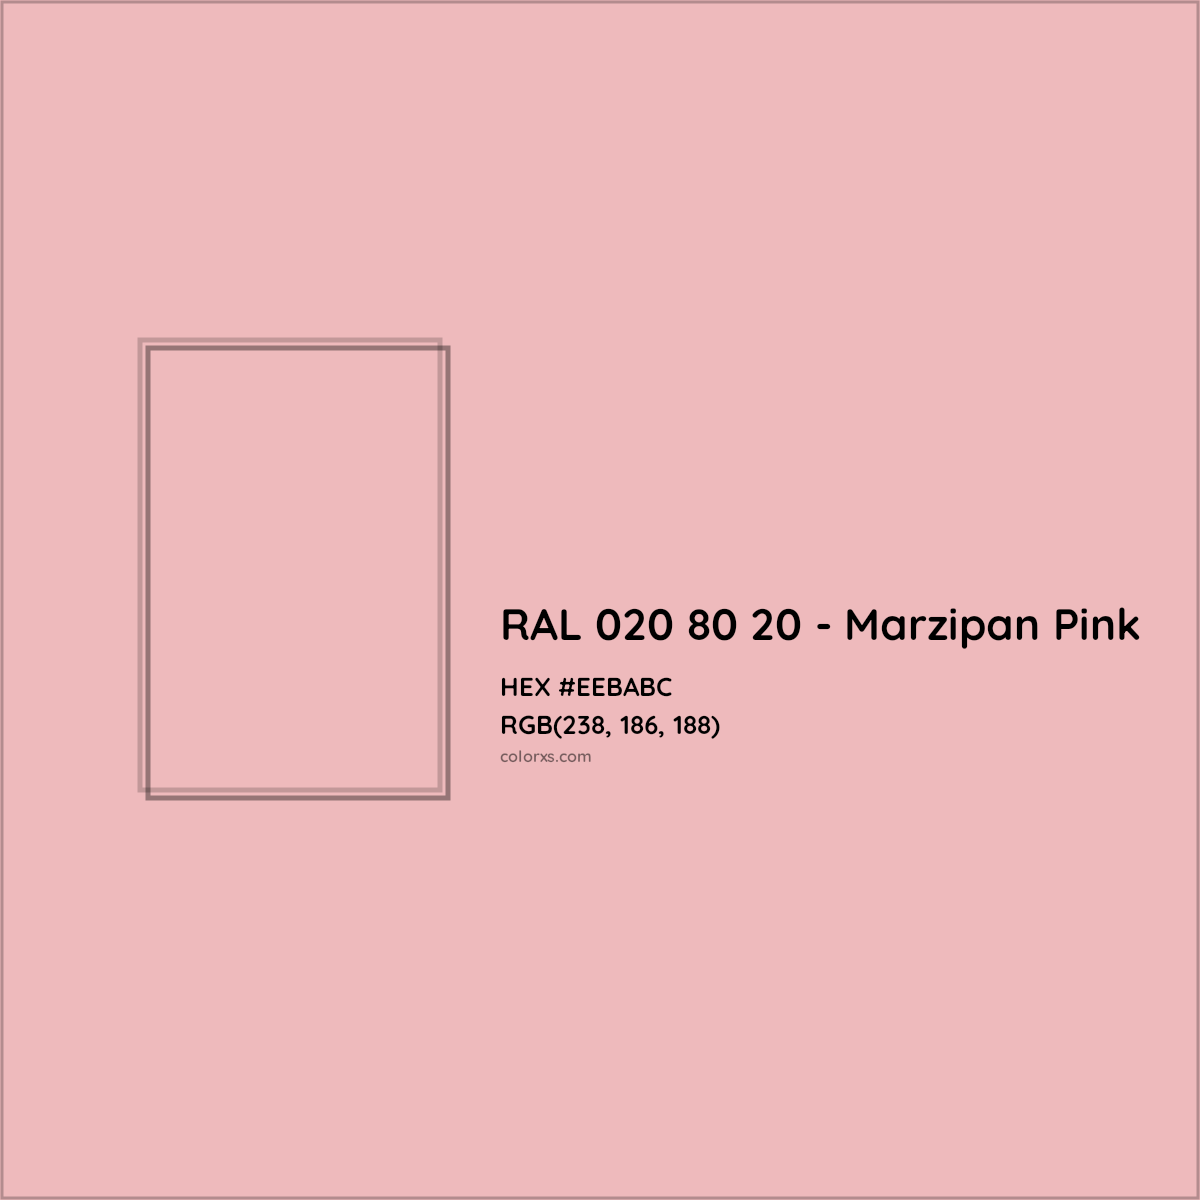 HEX #EEBABC RAL 020 80 20 - Marzipan Pink CMS RAL Design - Color Code